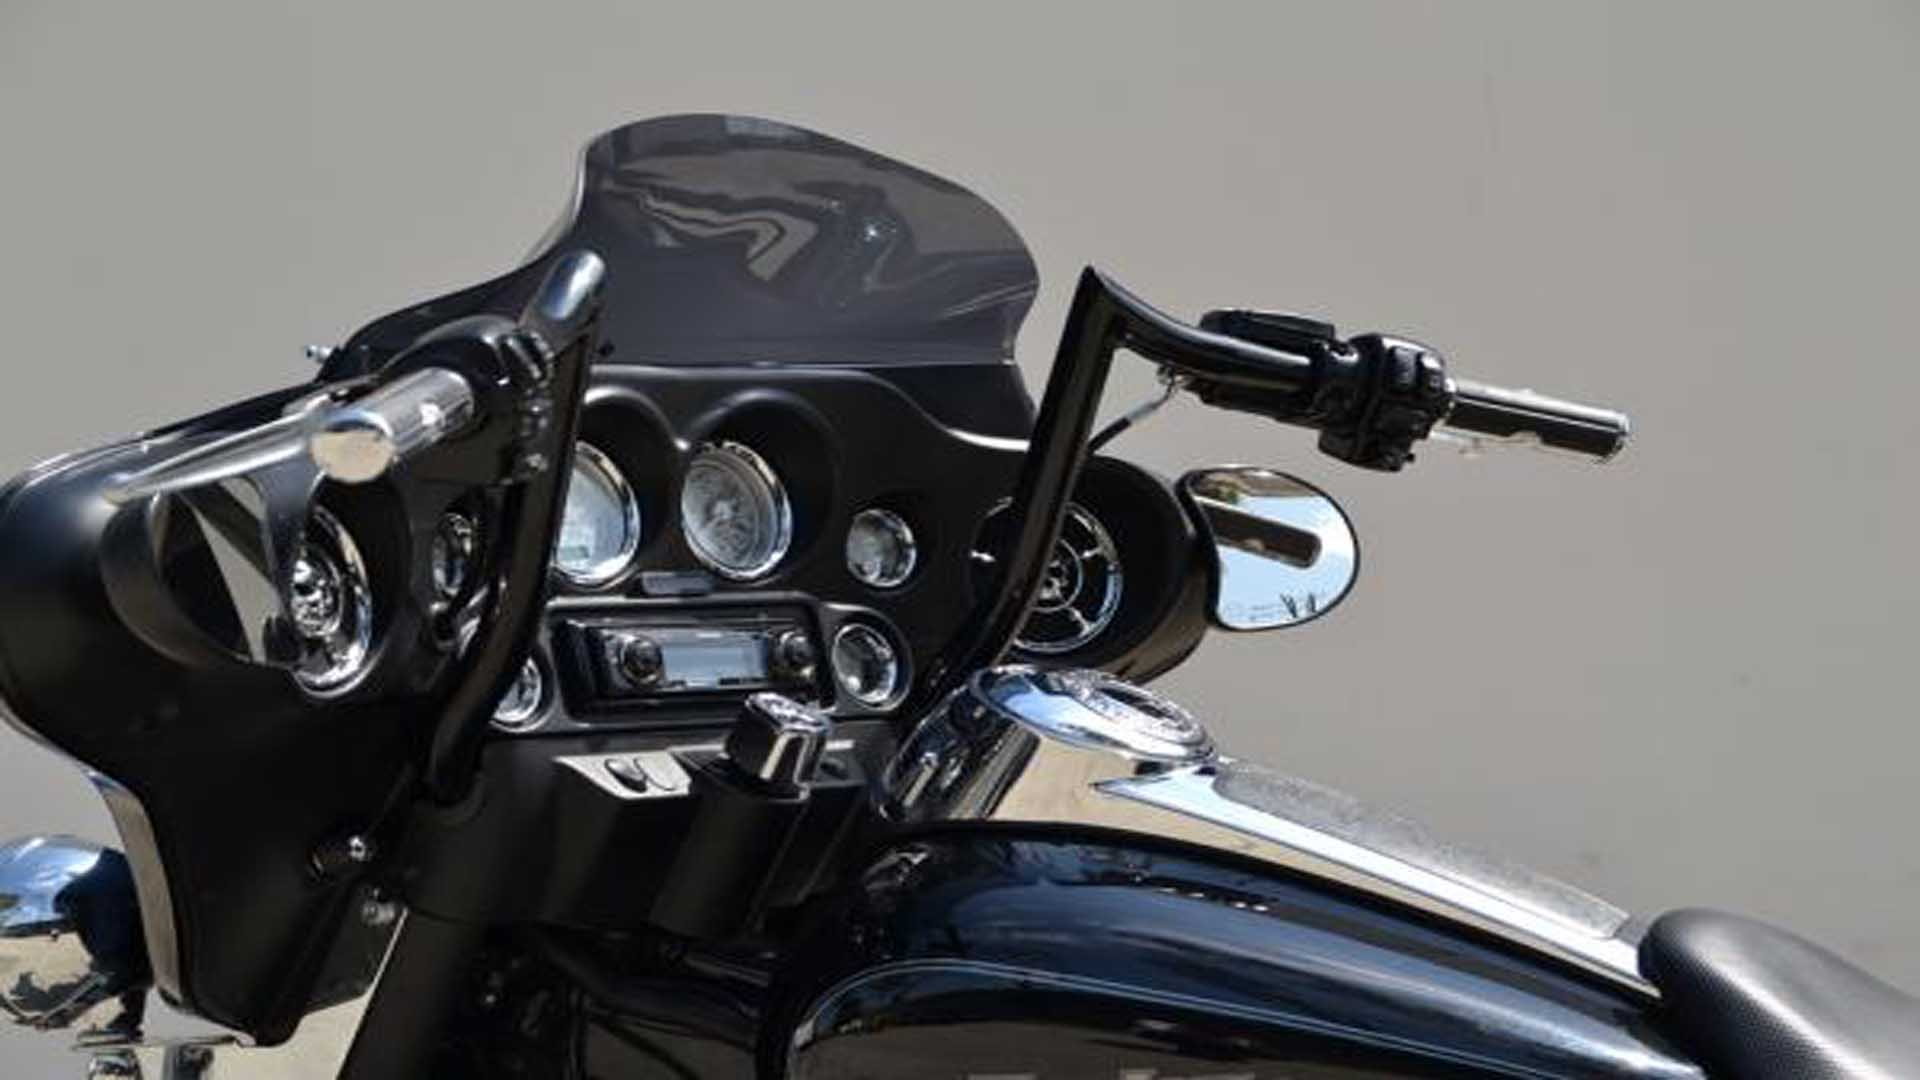 Harley Davidson Touring: How to Install Handlebars | Hdforums